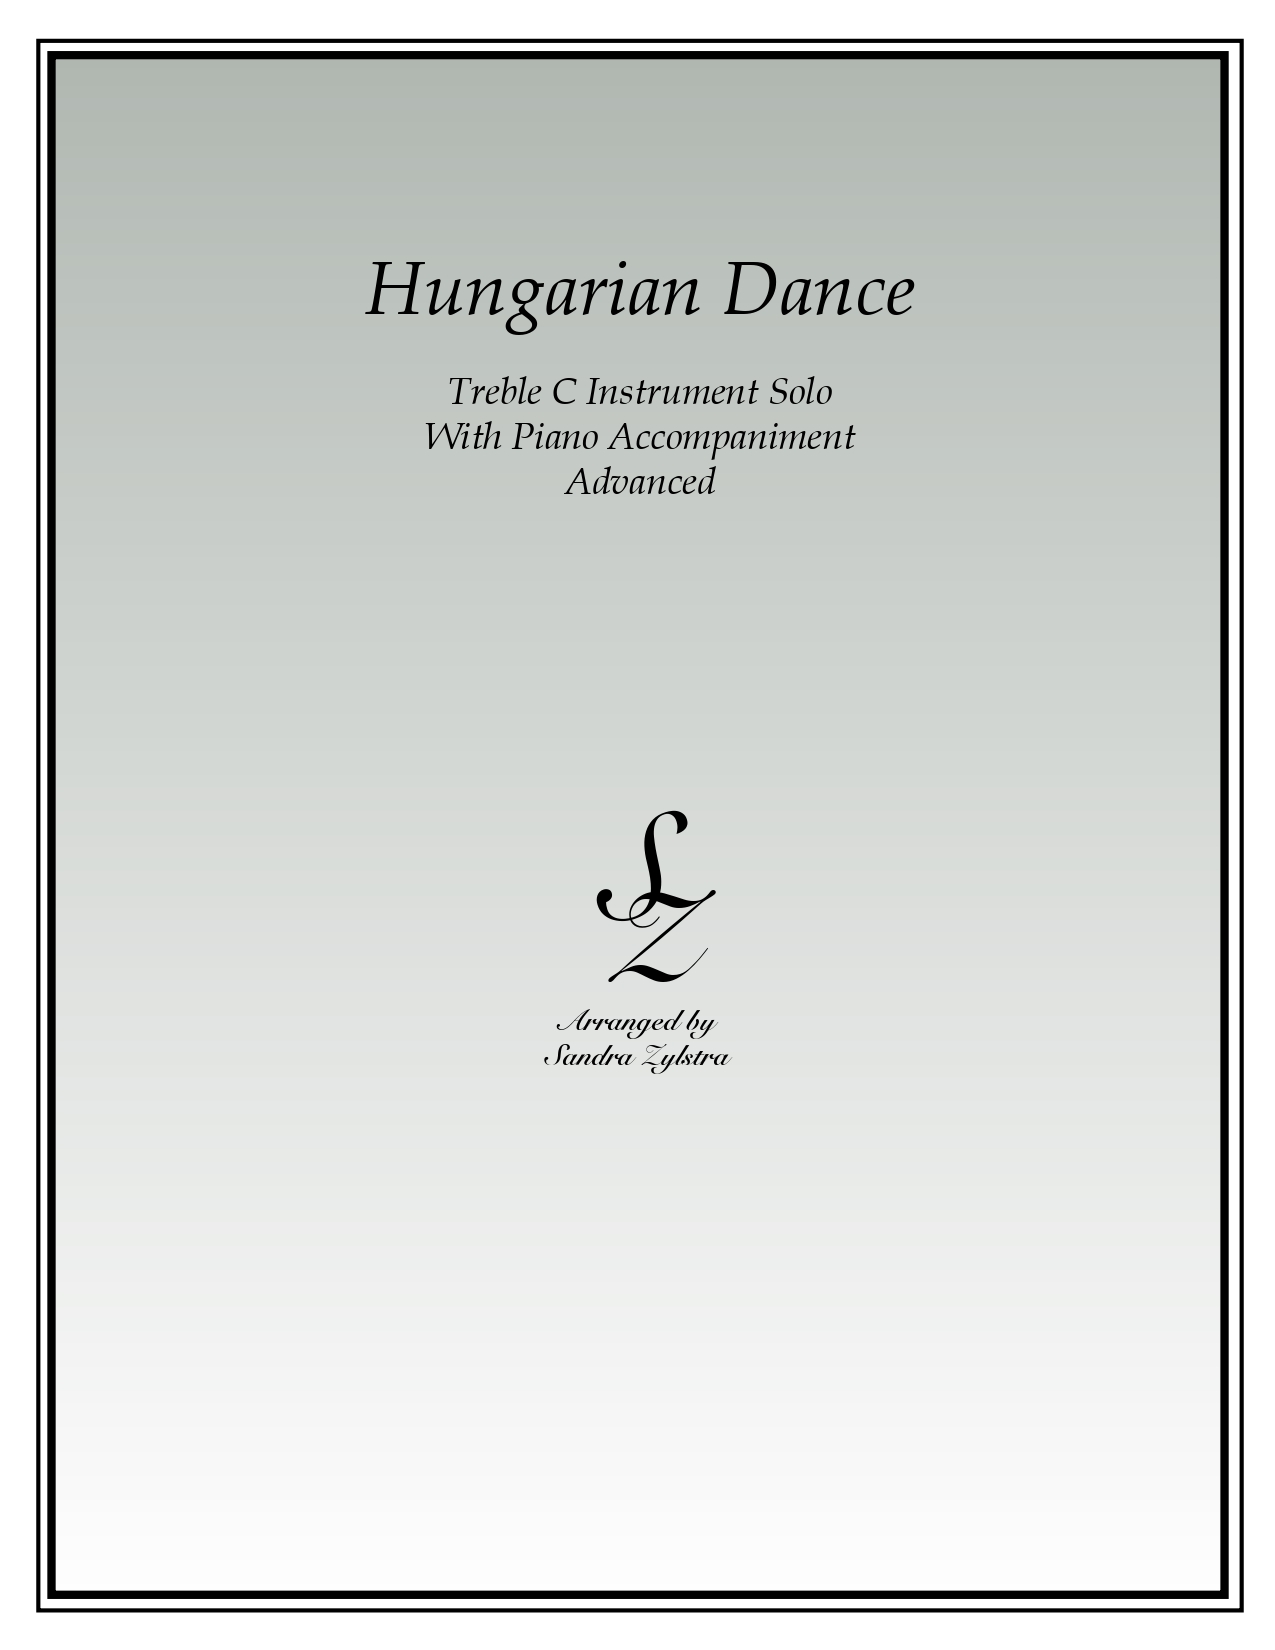 Hungarian Dance treble C instrument solo part cover page 00011